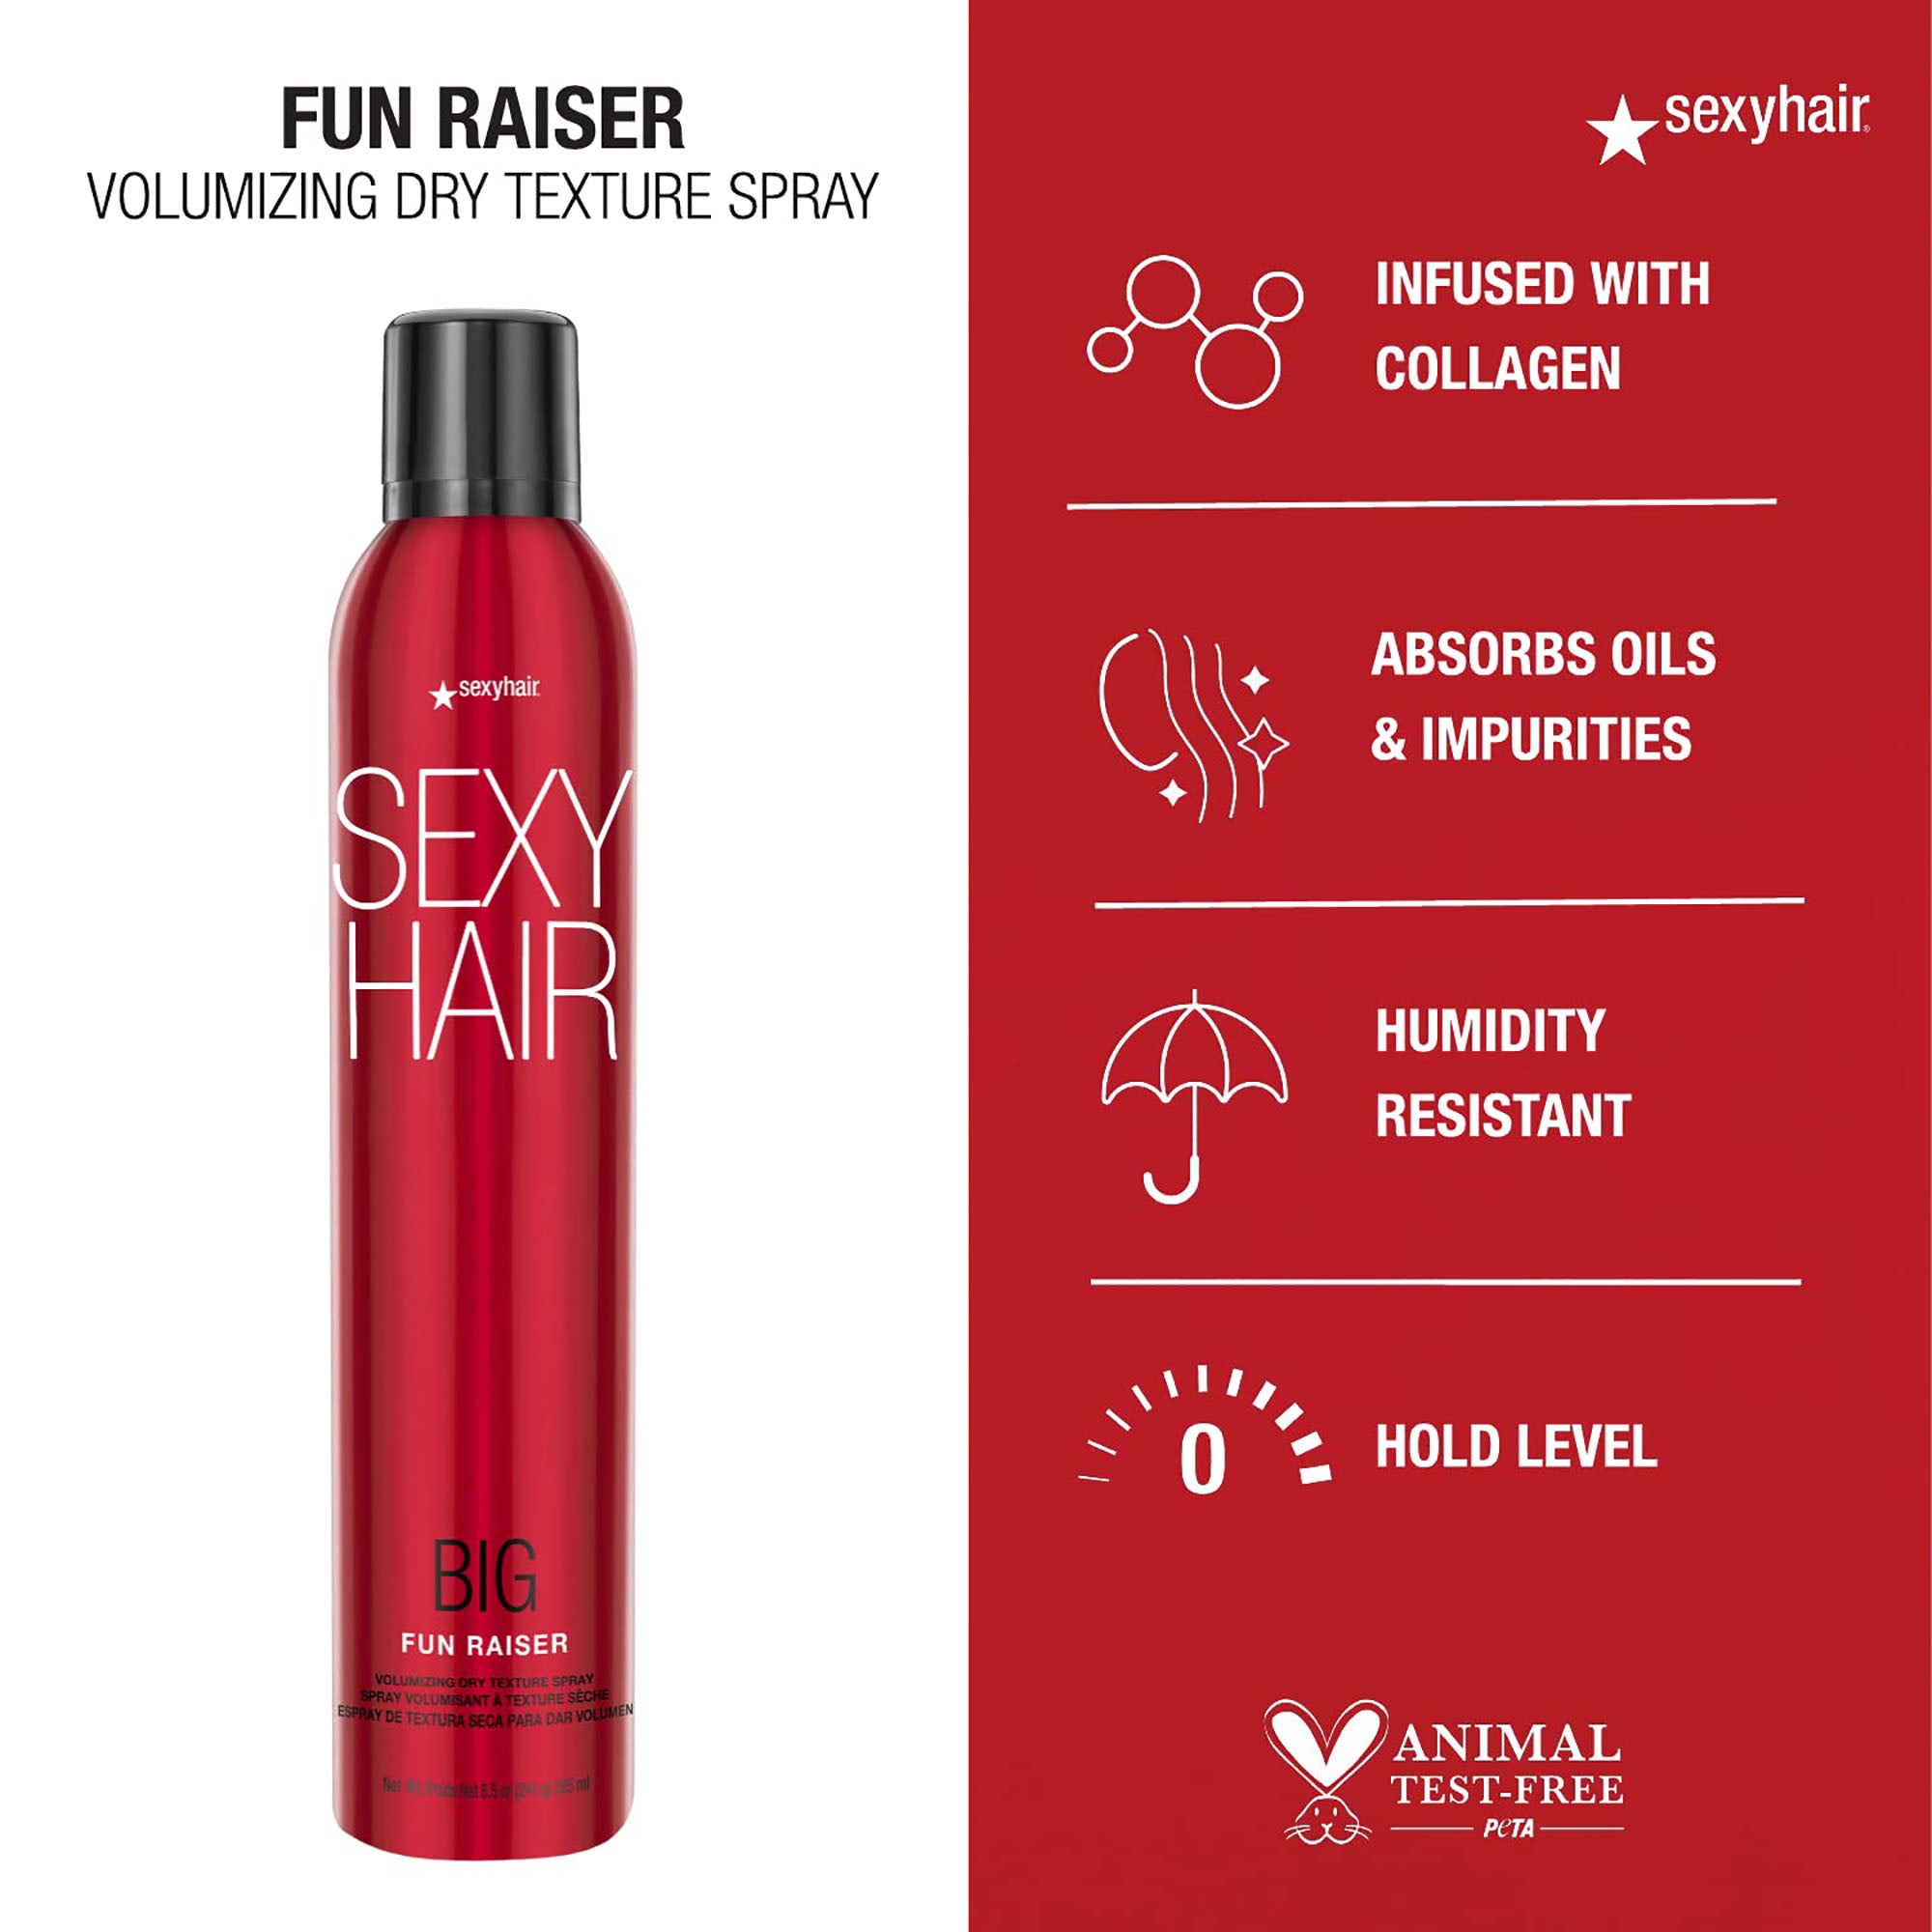 Sexy Hair Fun Raiser Dry Texturizing Spray / 8.5